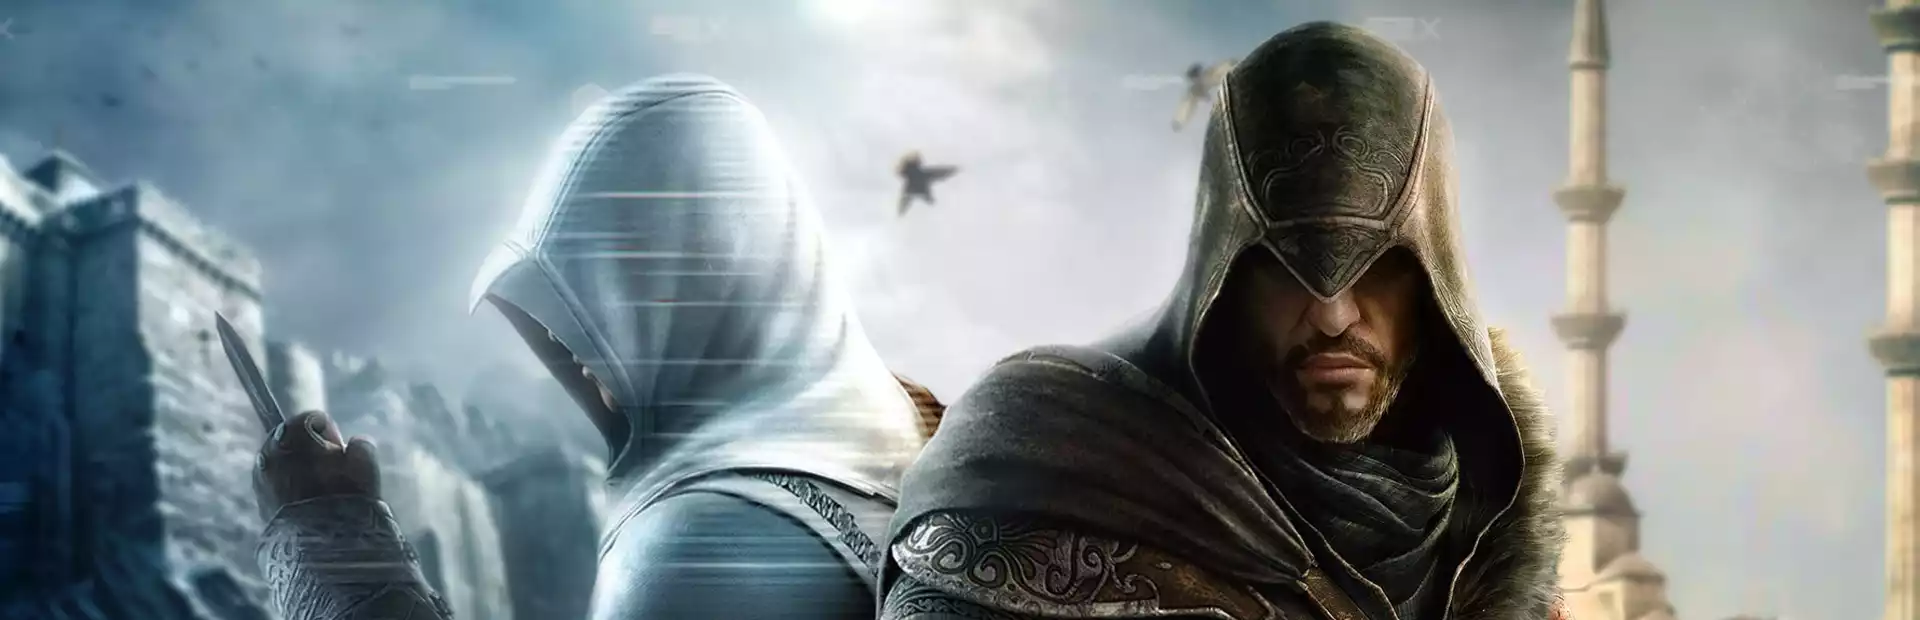 Assassin's Creed: Revelations Uplay Key China